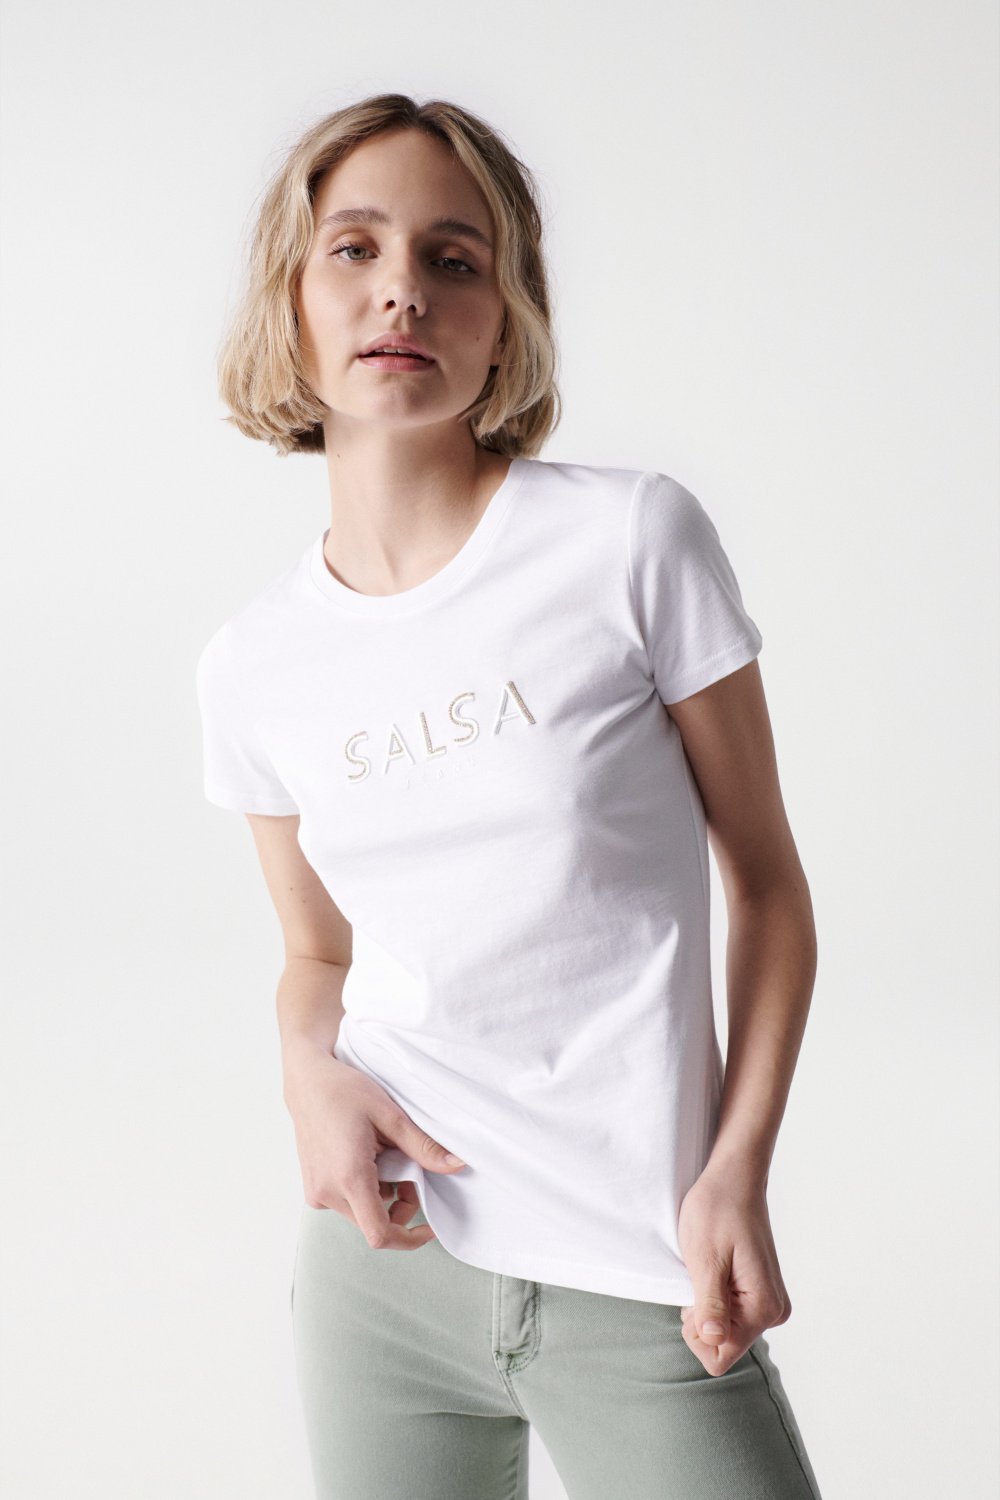 White t-shirt with Salsa name - Salsa